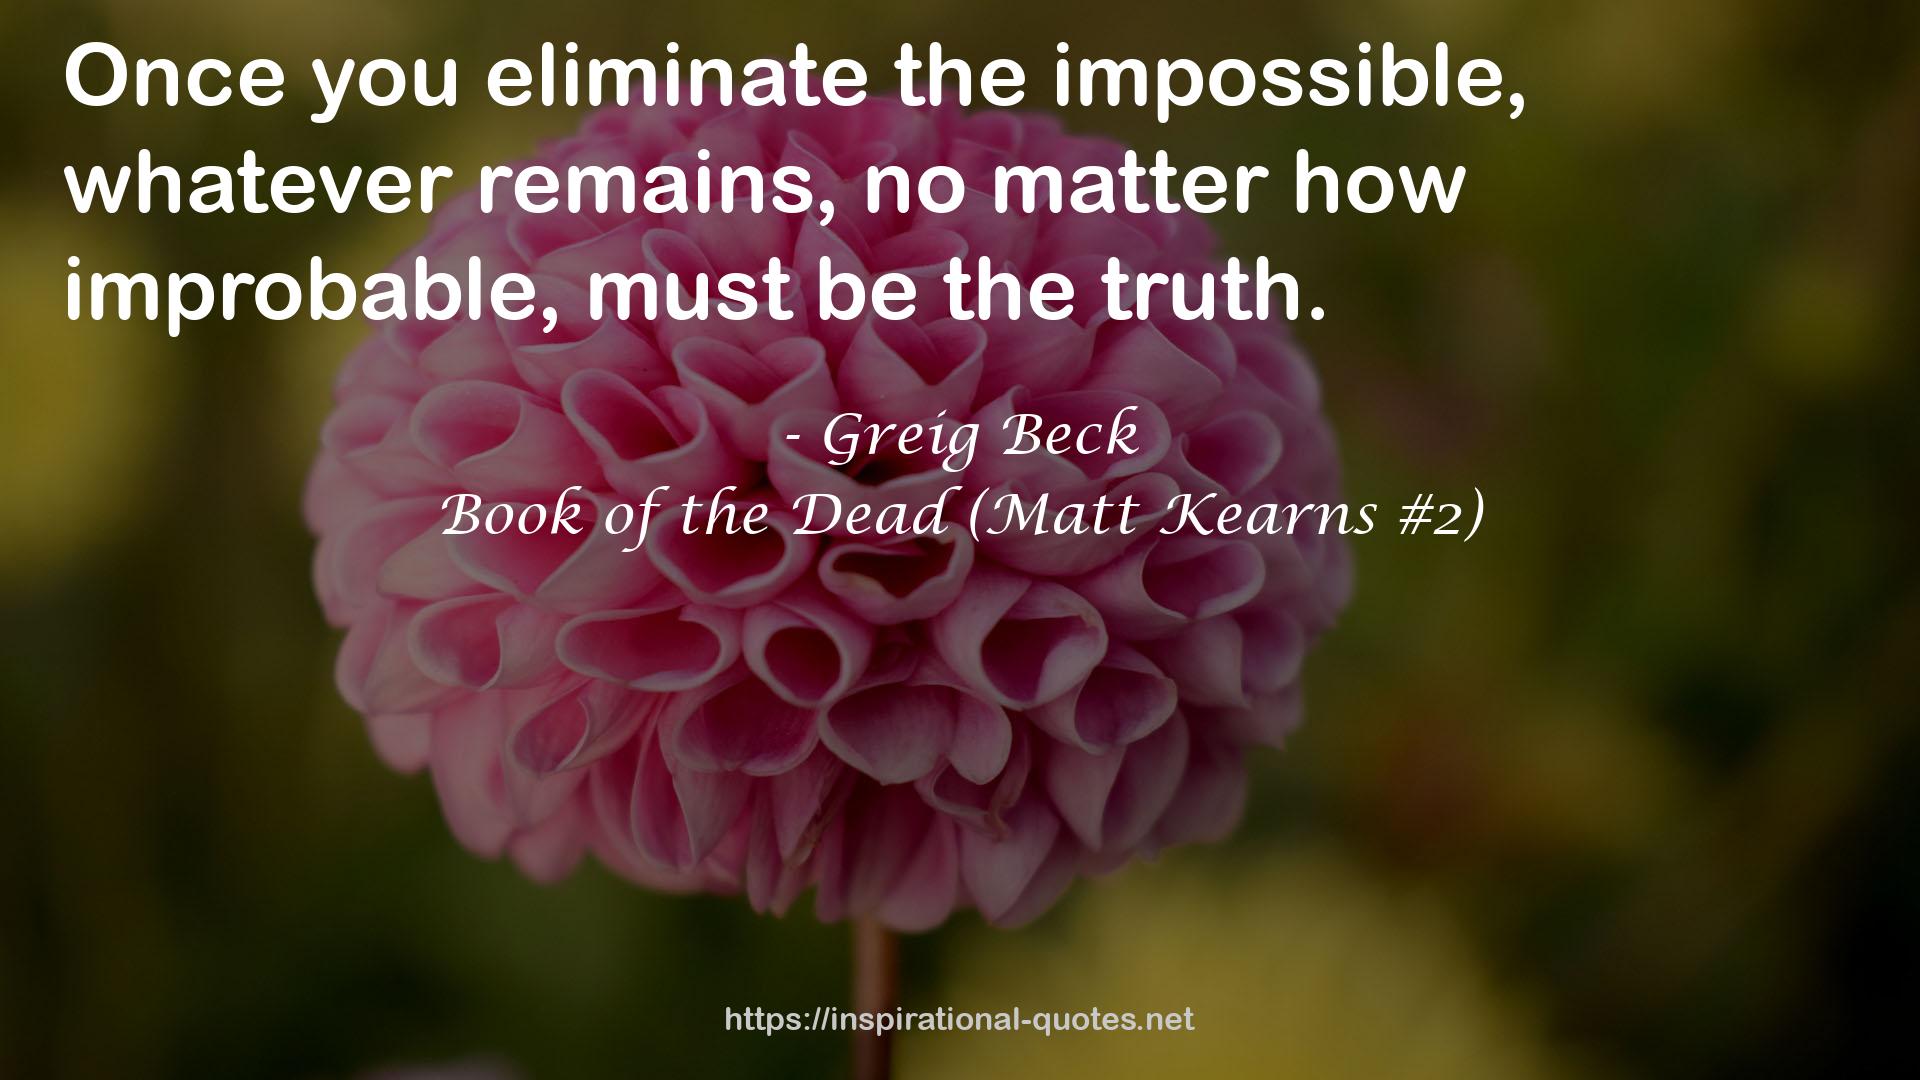 Book of the Dead (Matt Kearns #2) QUOTES